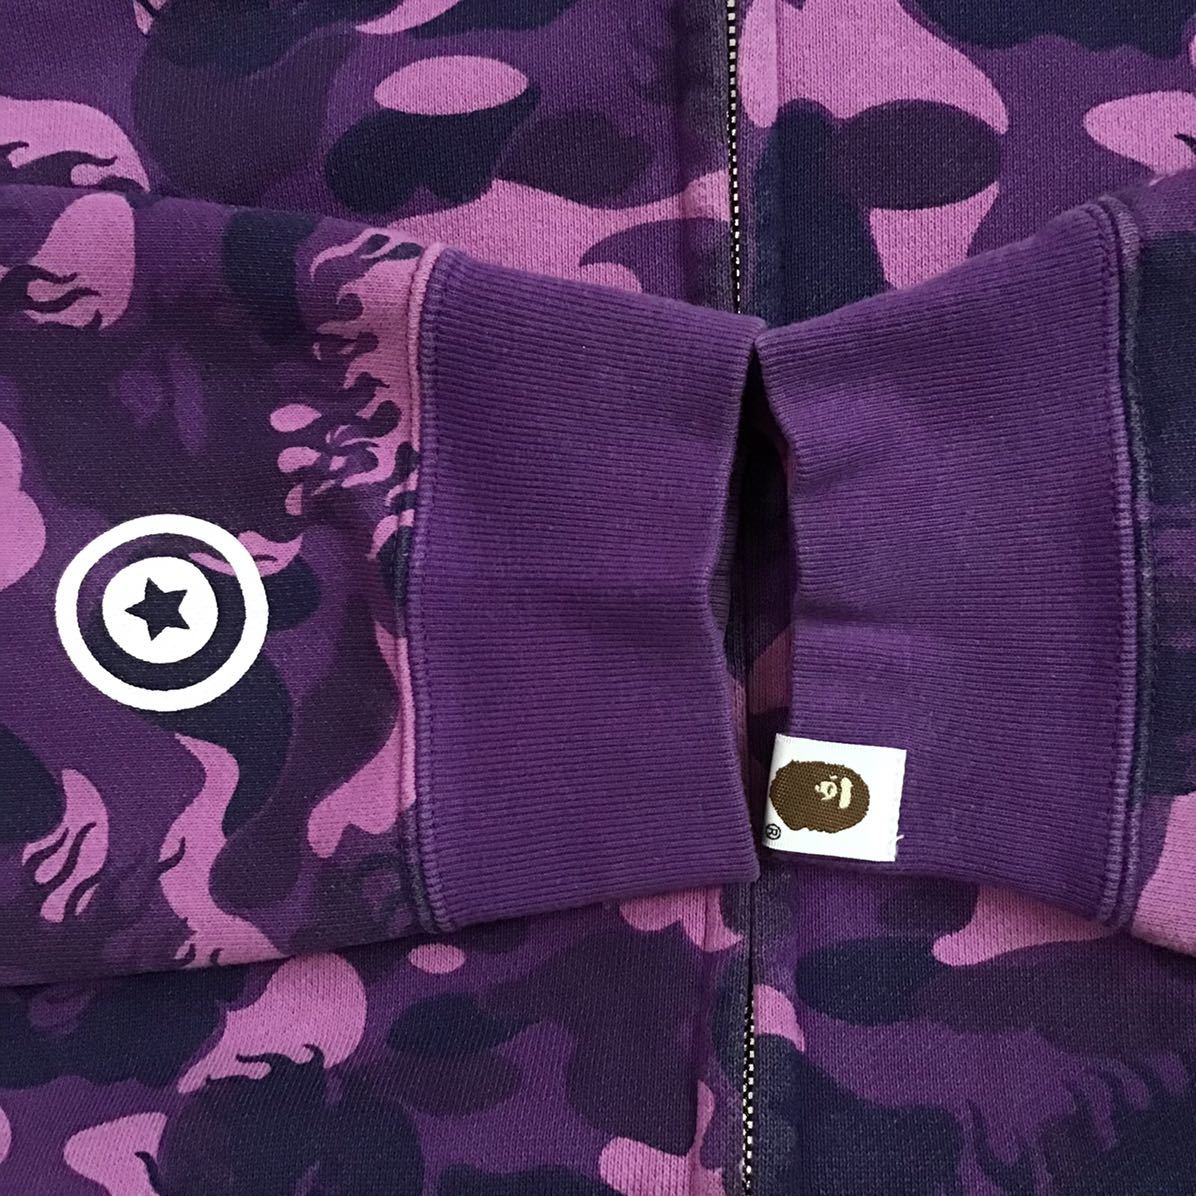 ★XL★ ★ムック限定★ Fire camo シャーク パーカー shark full zip hoodie a bathing ape BAPE purple camo エイプ ベイプ NIGO 迷彩 z9_画像6